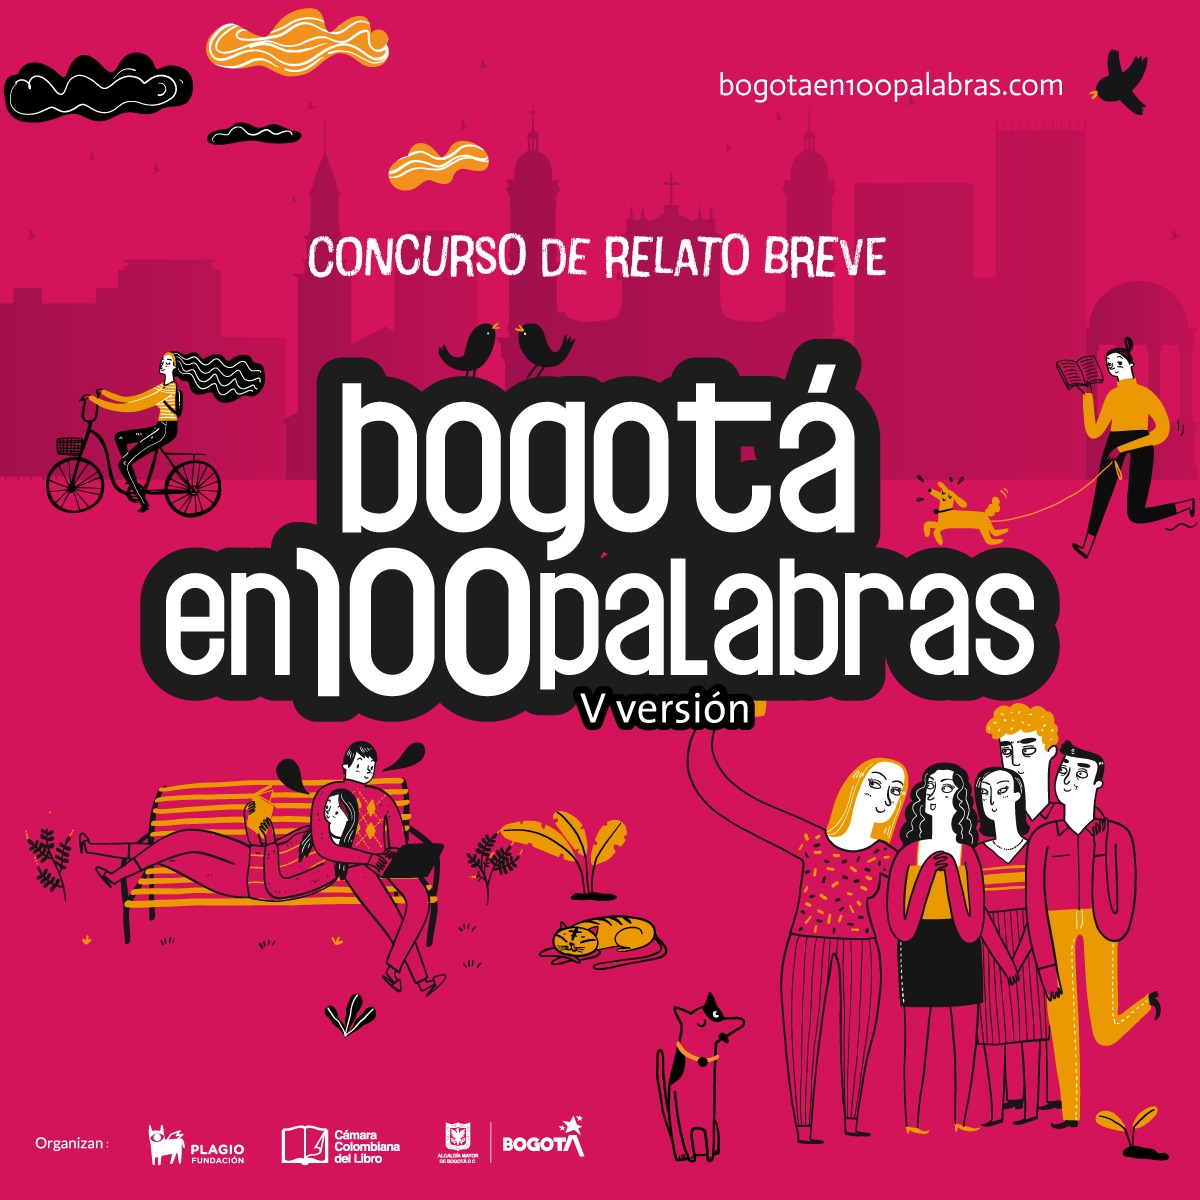 Bogotá en 100 palabras